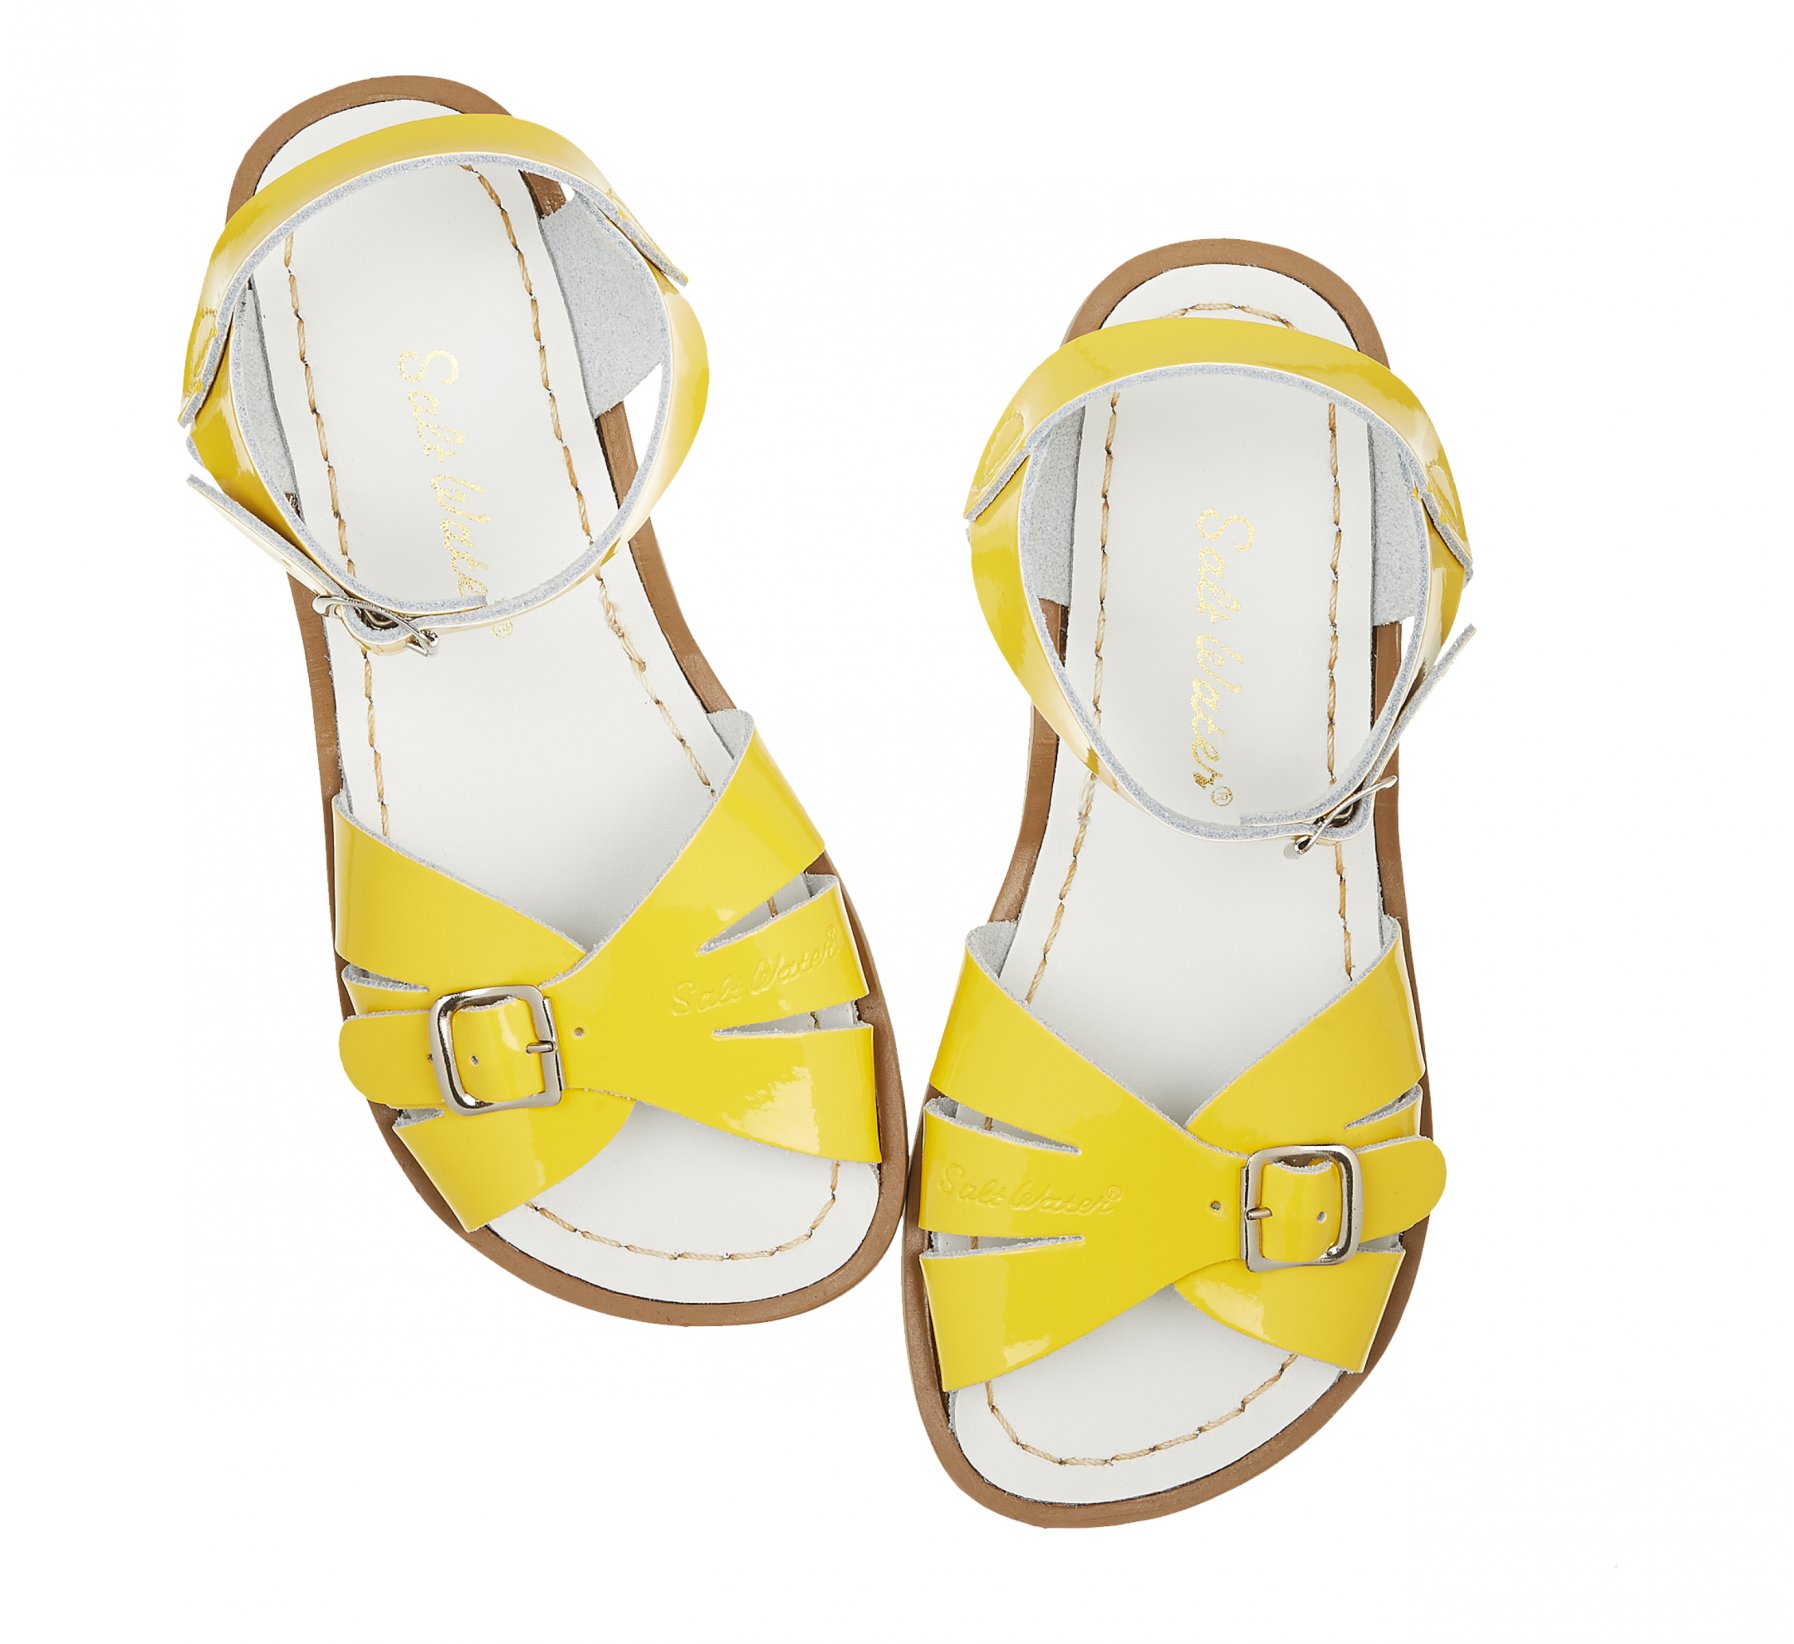 Classic Shiny Yellow Sandal - Salt Water Sandals